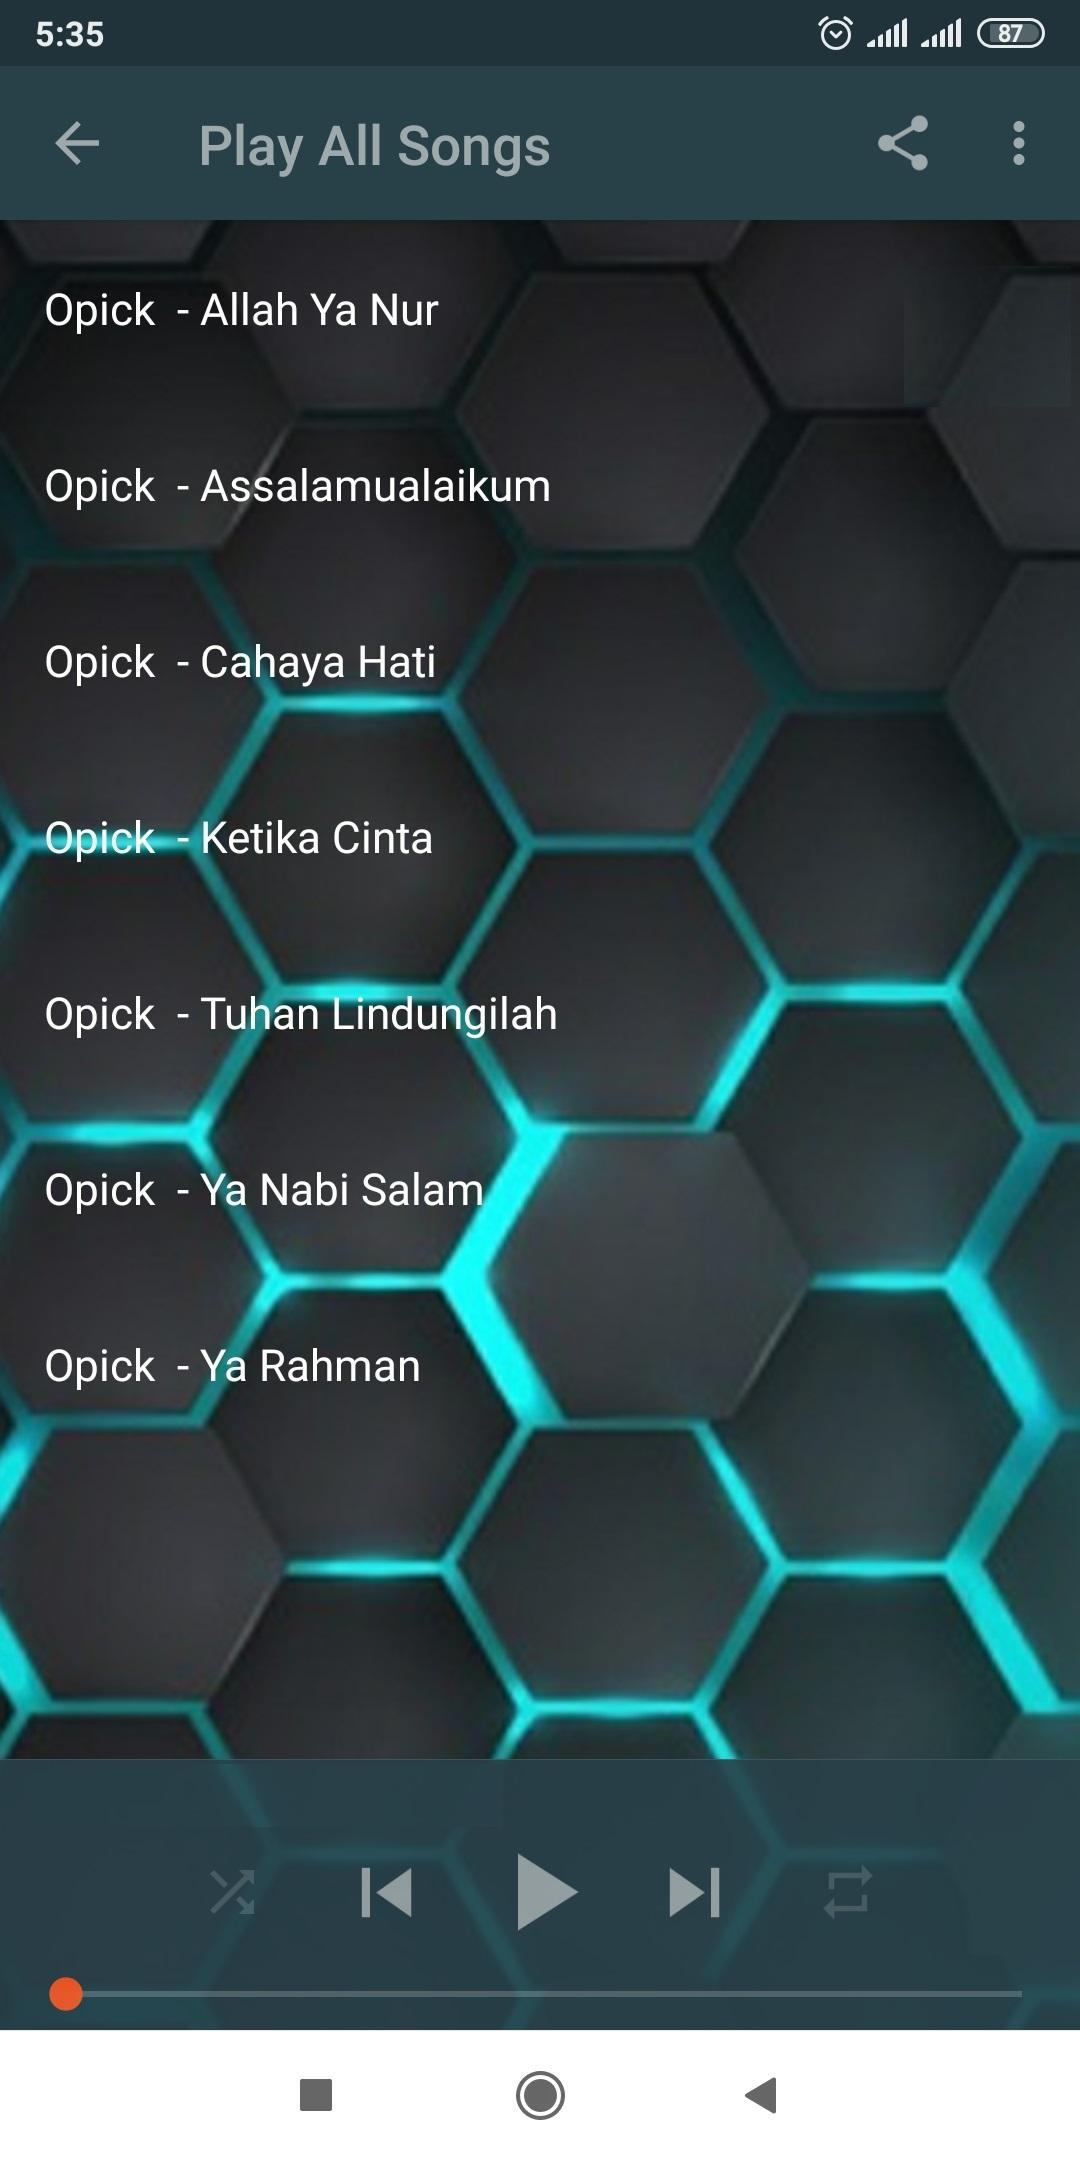 Lagu Opick Assalamualaikum Offline Mp3 For Android Apk Download